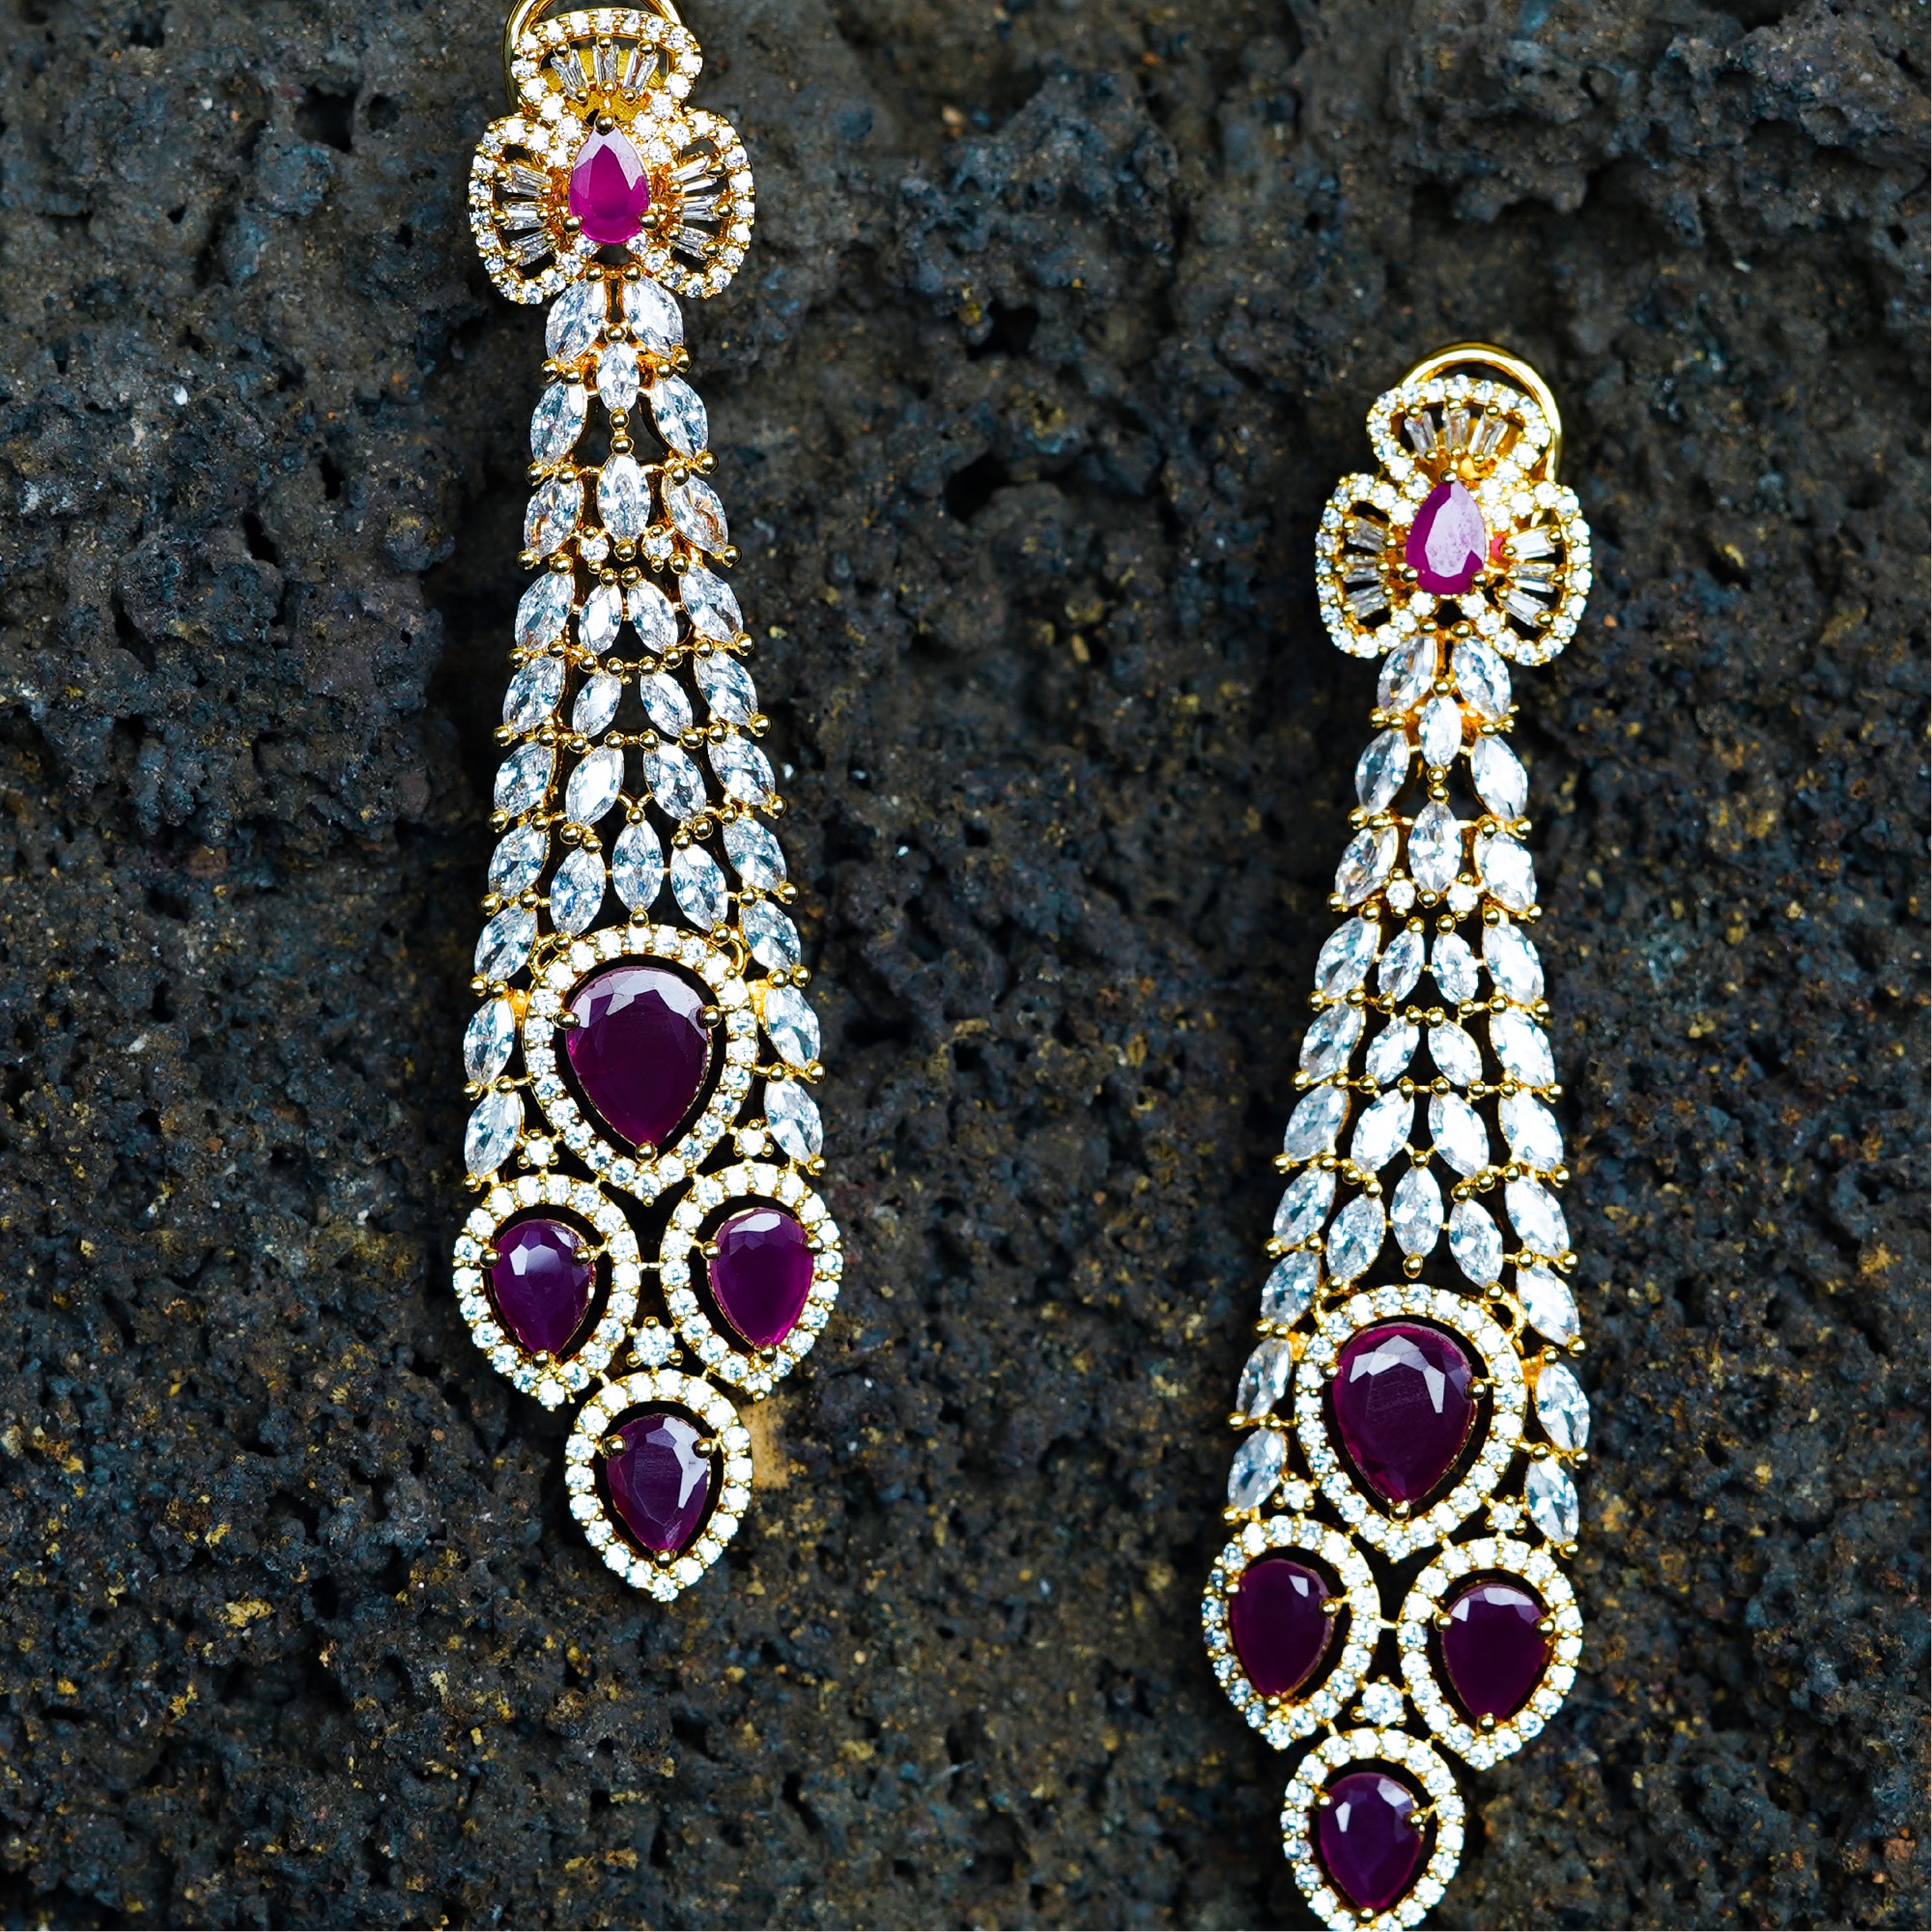 Buy The Spirited Gold Stud Earrings with Amethyst Online in India | Zariin